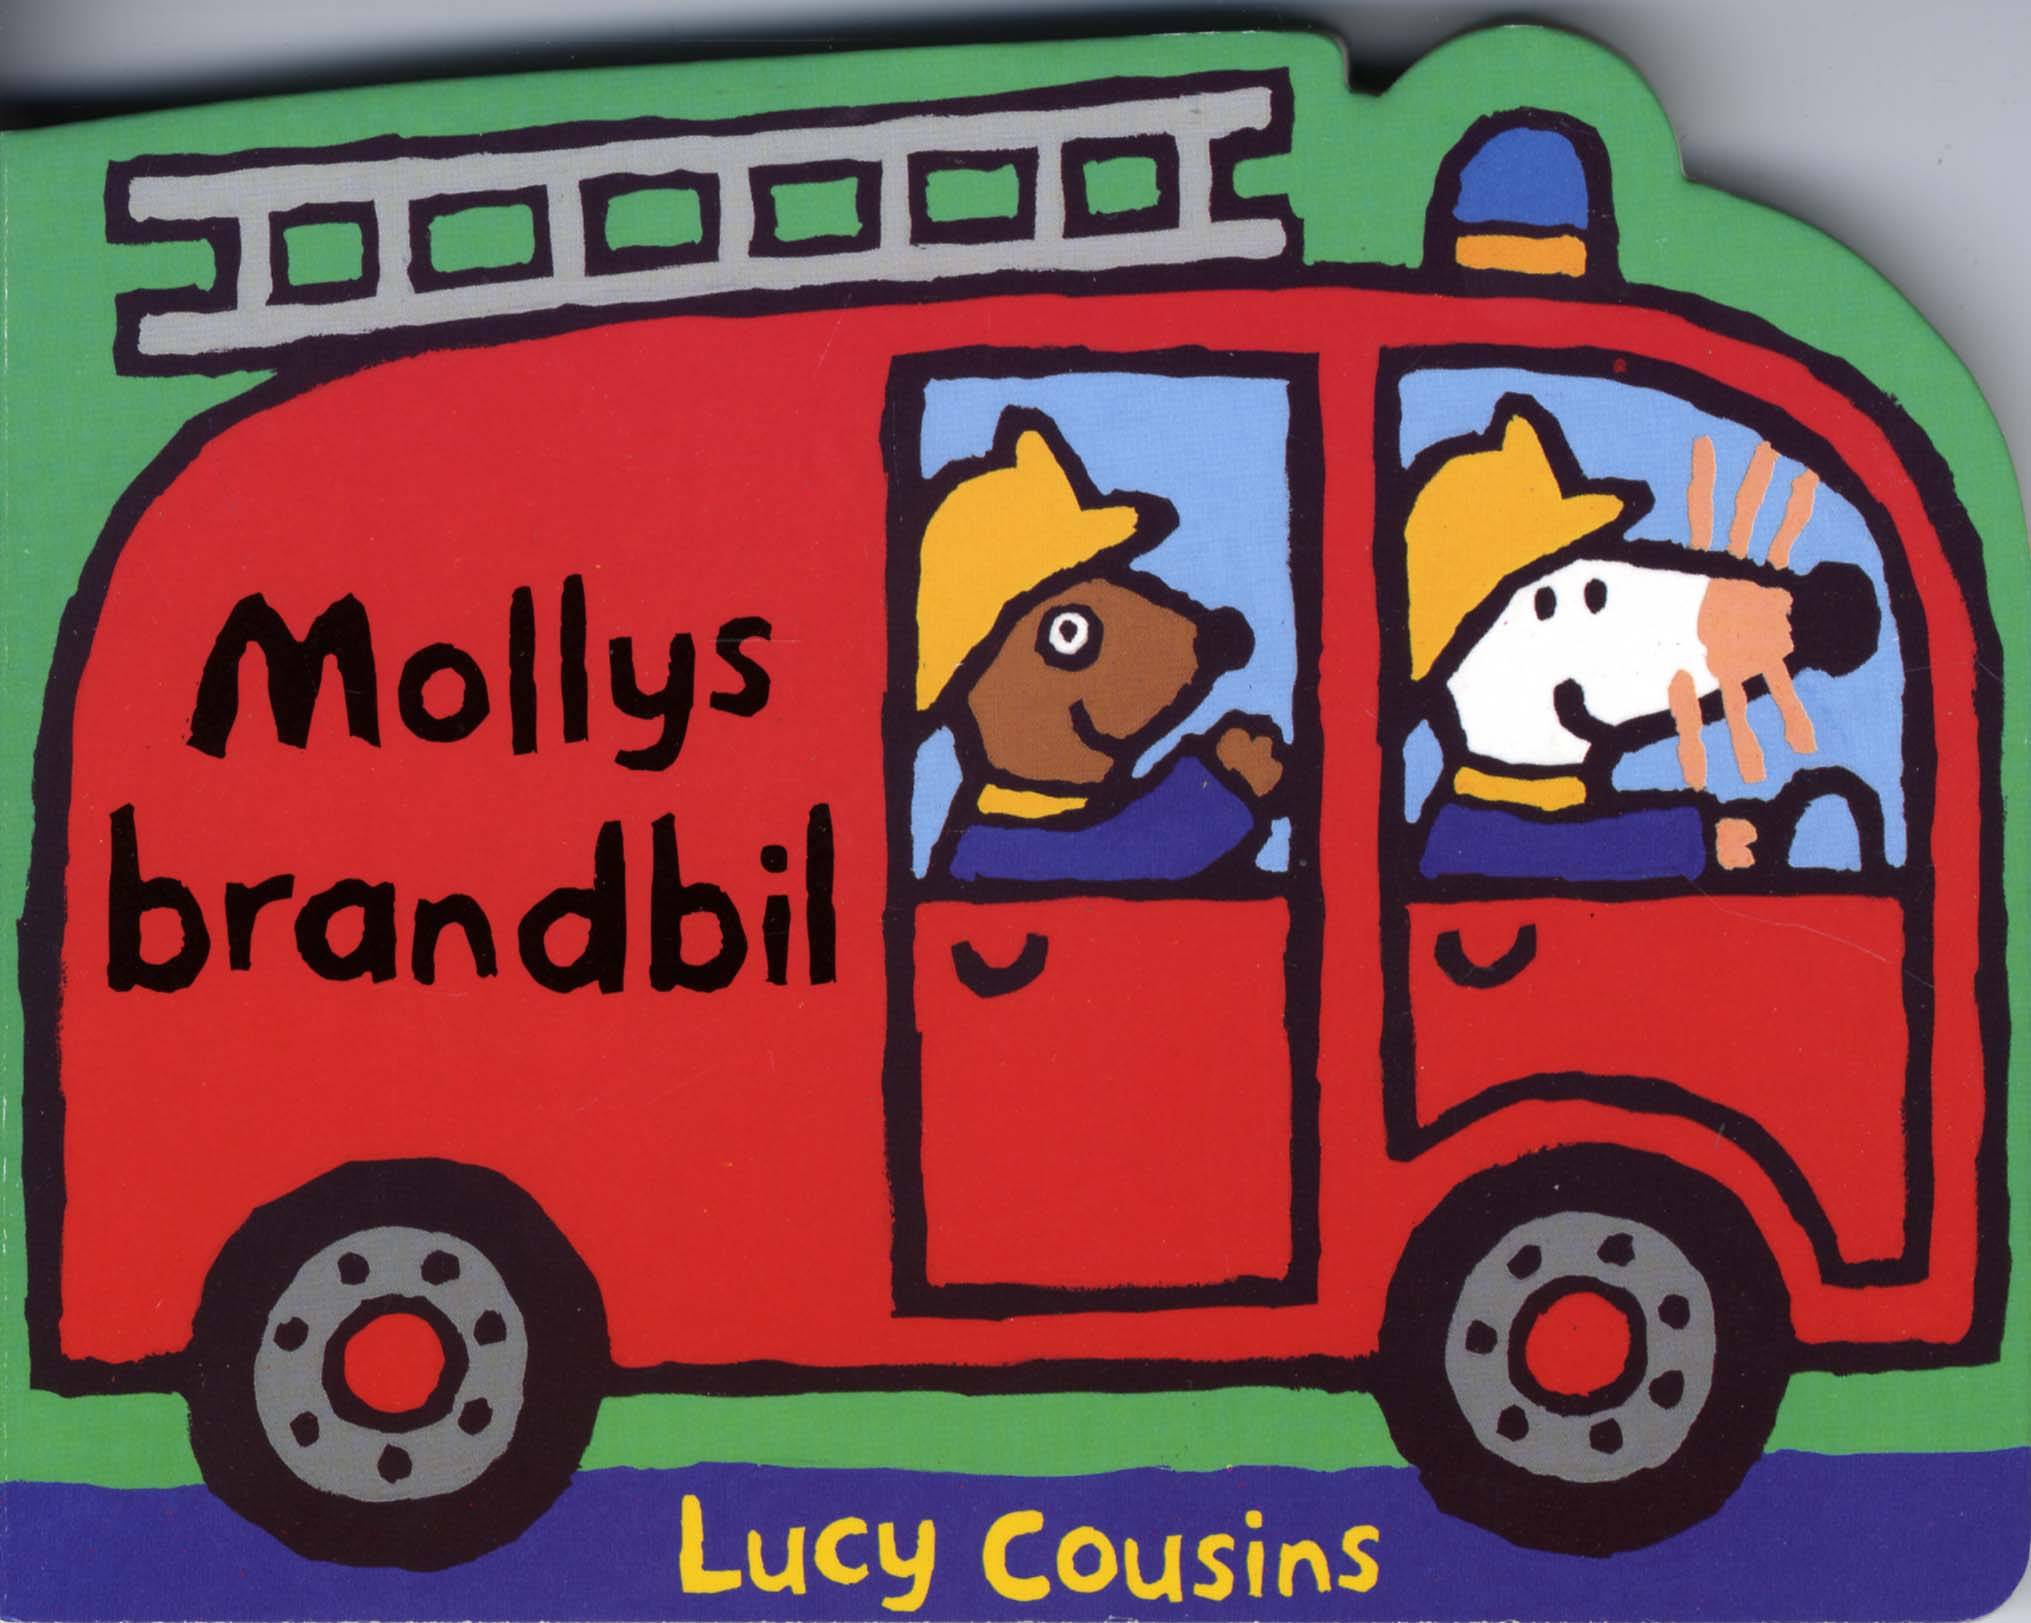 Mollys brandbil